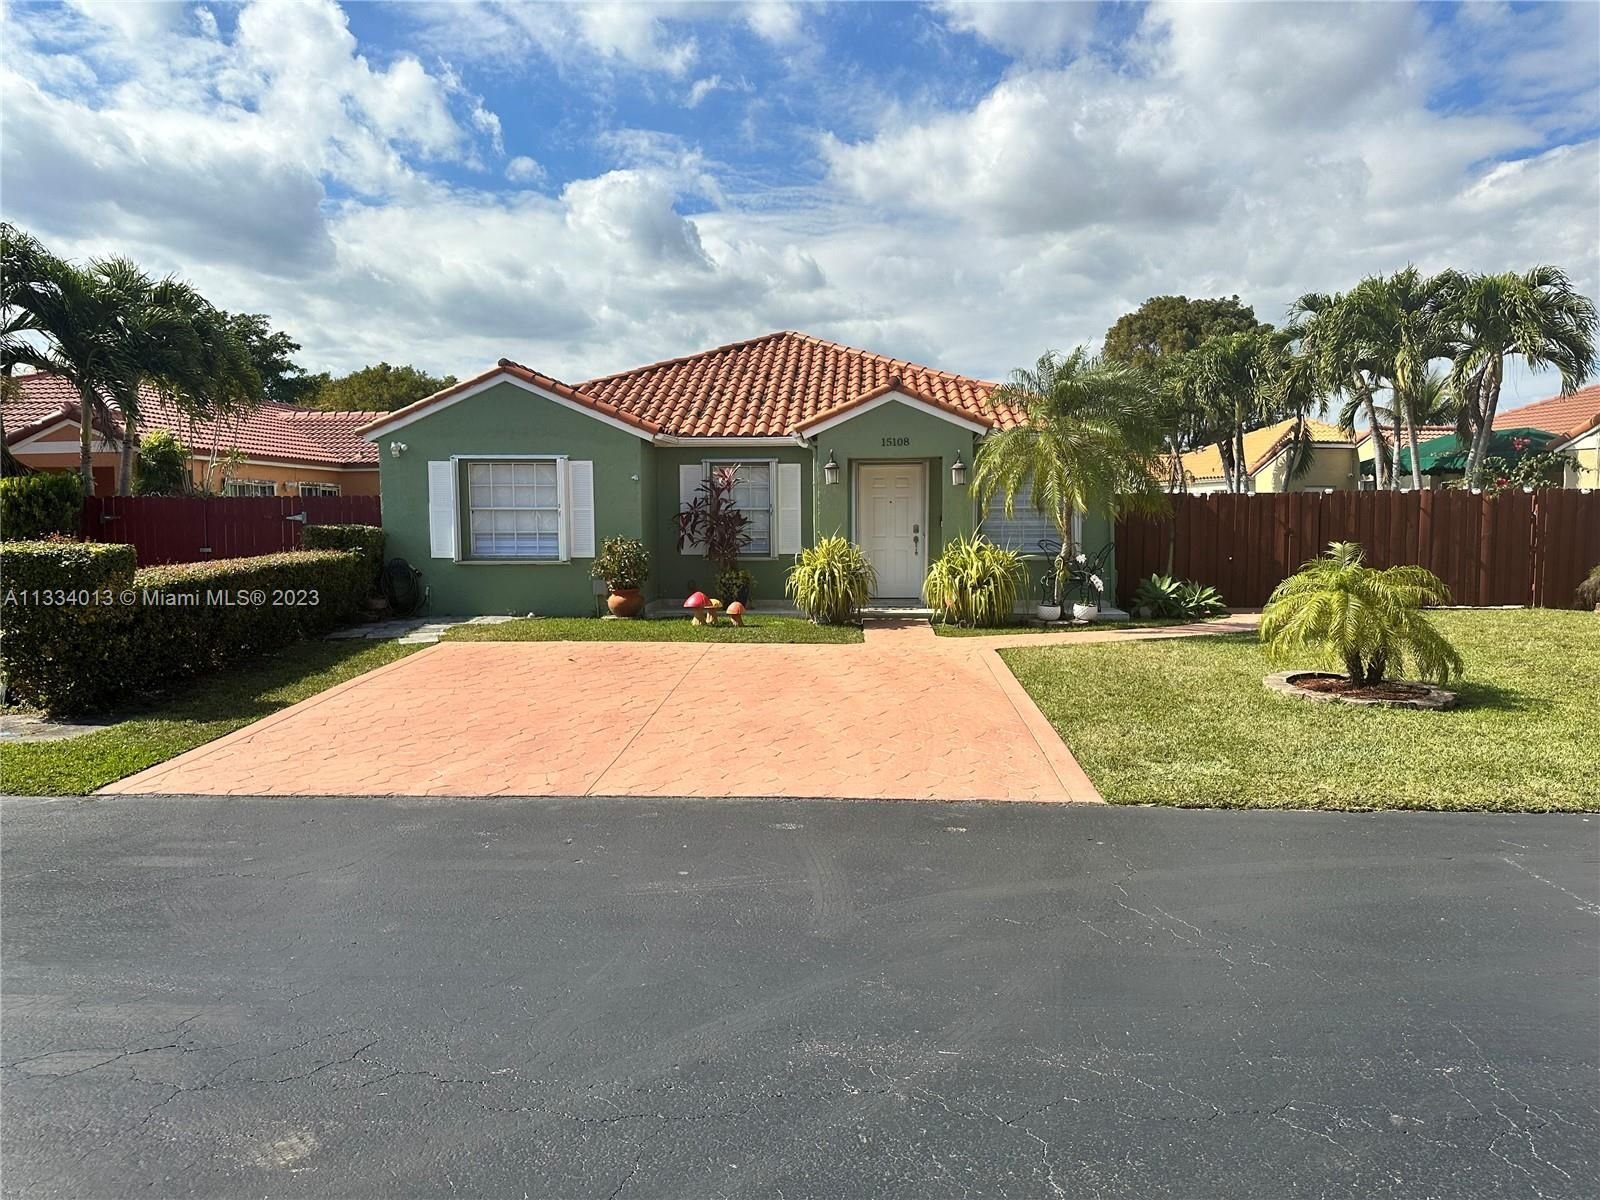 Real estate property located at 15108 128th Pl, Miami-Dade County, Miami, FL